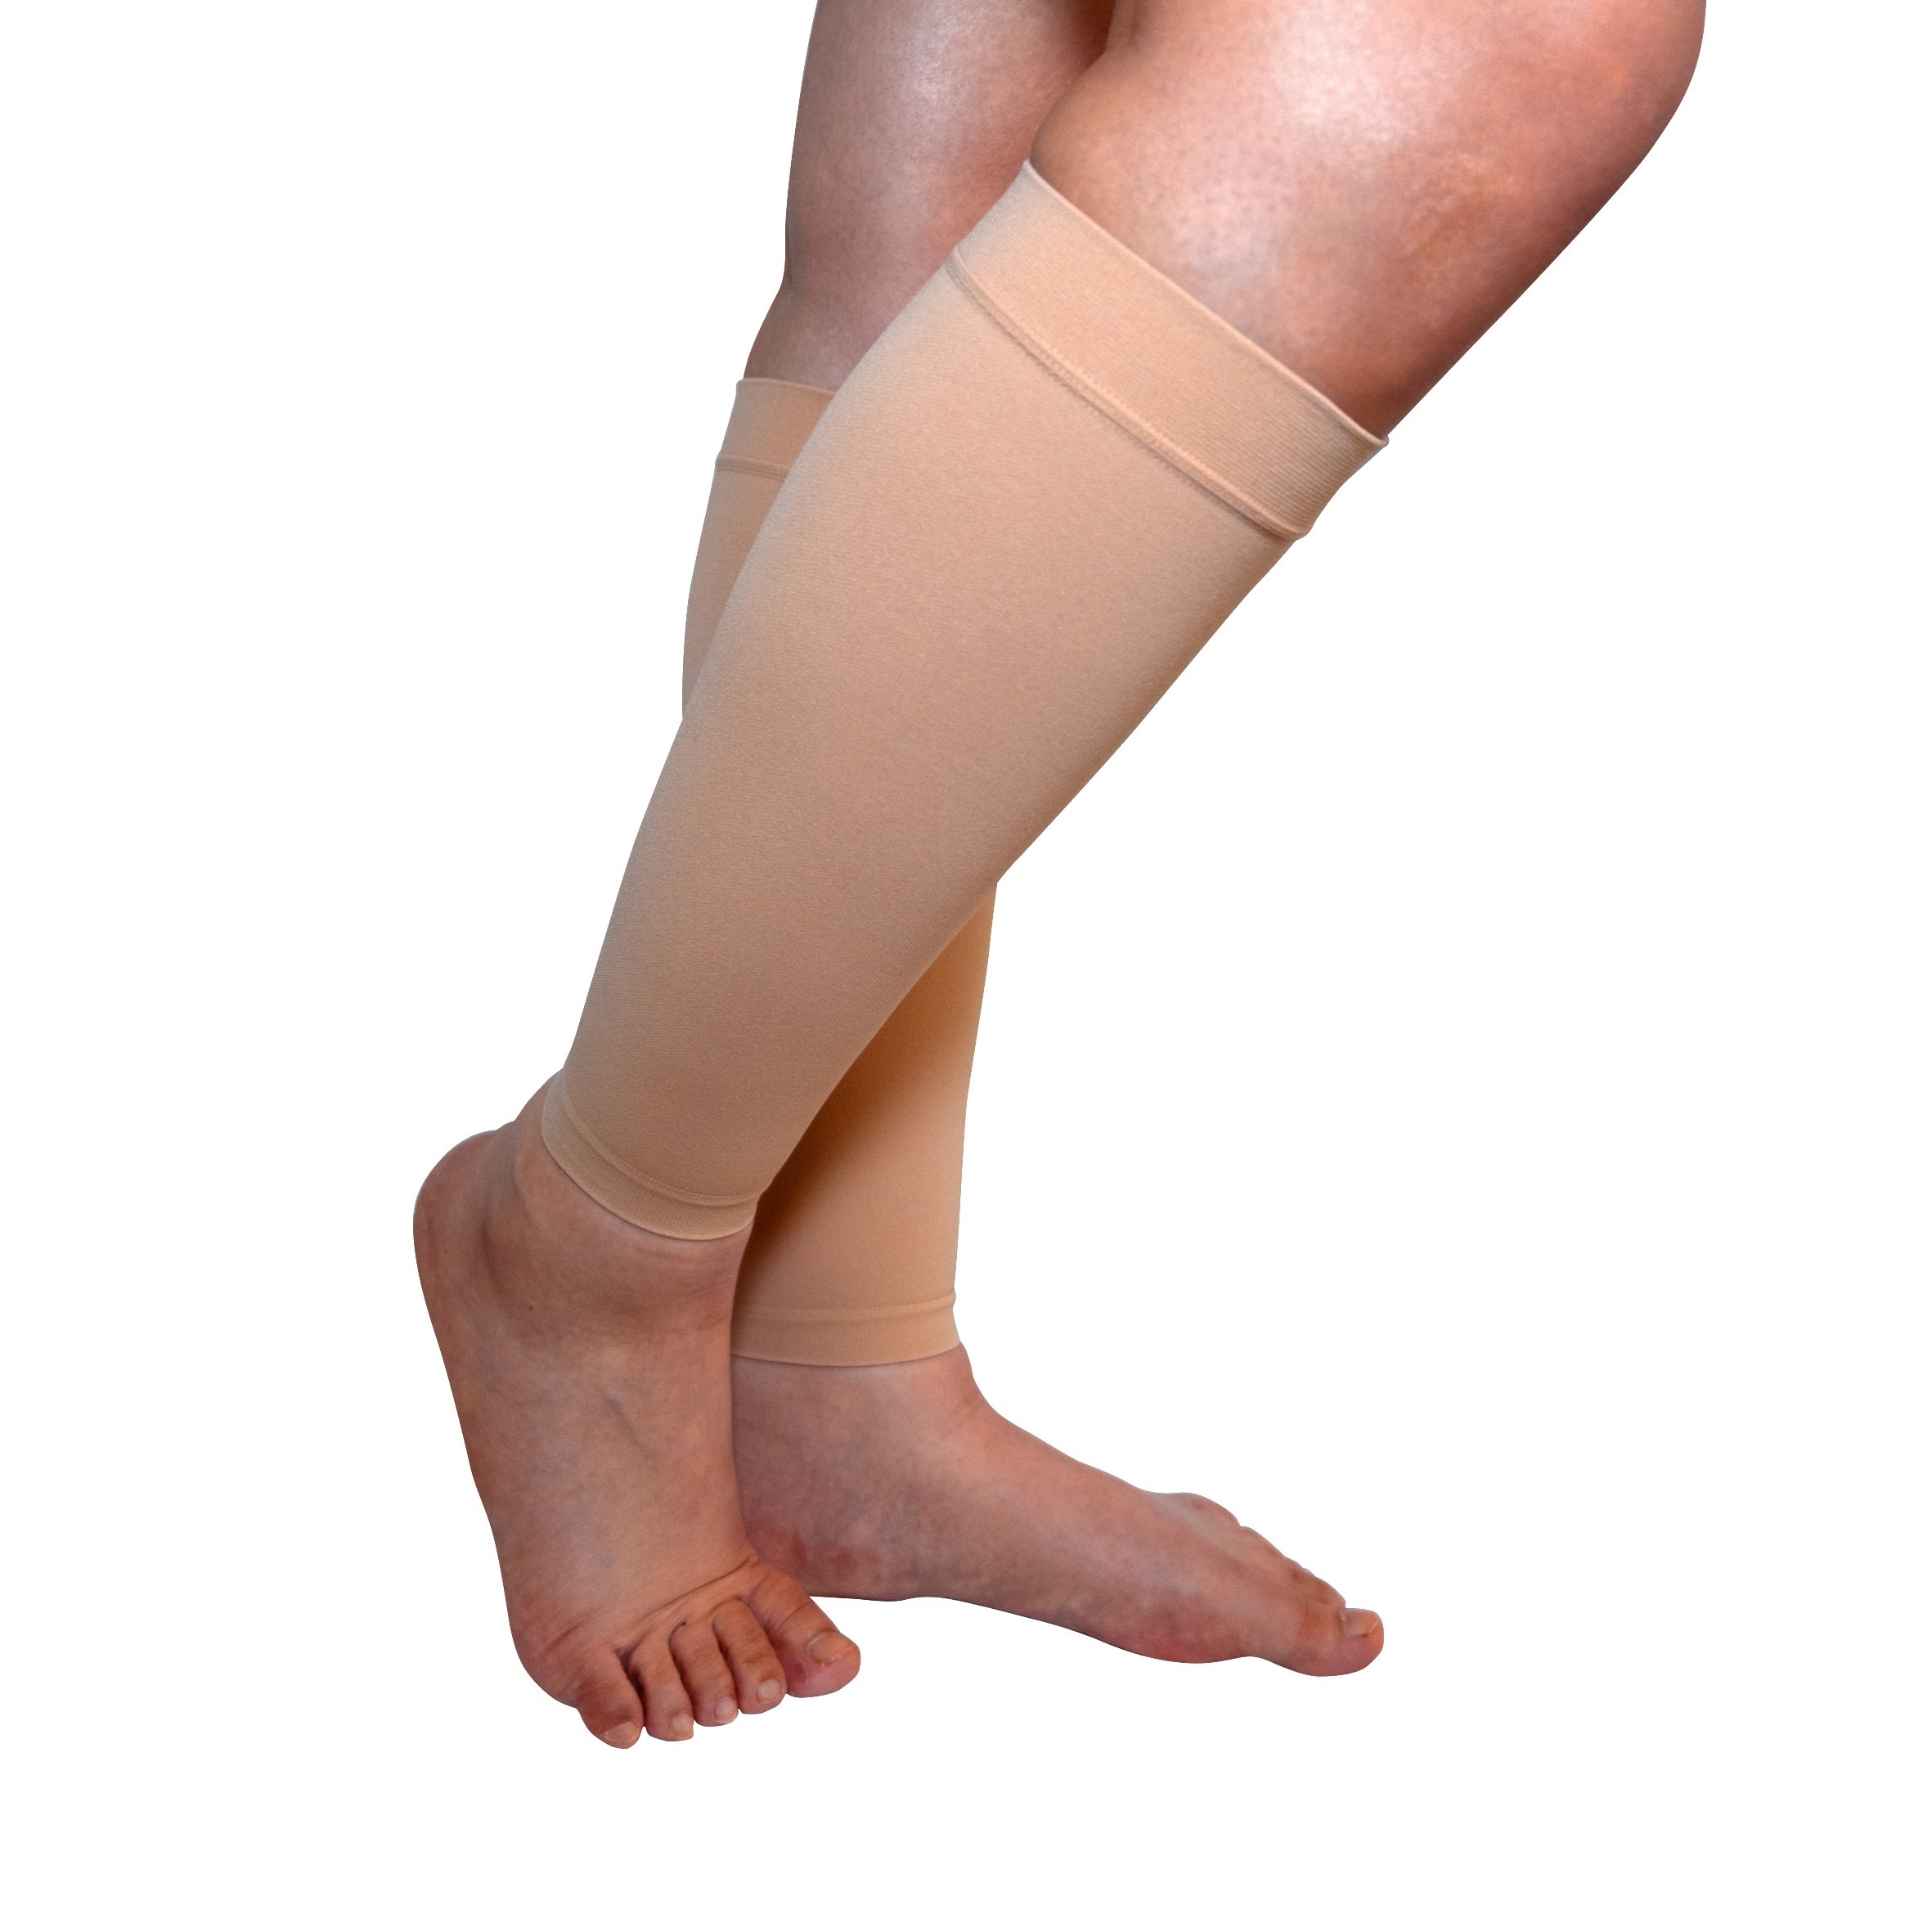 Footless Support Pantyhose for Women 20-30mmHg Varicose Veins - Black,  Medium